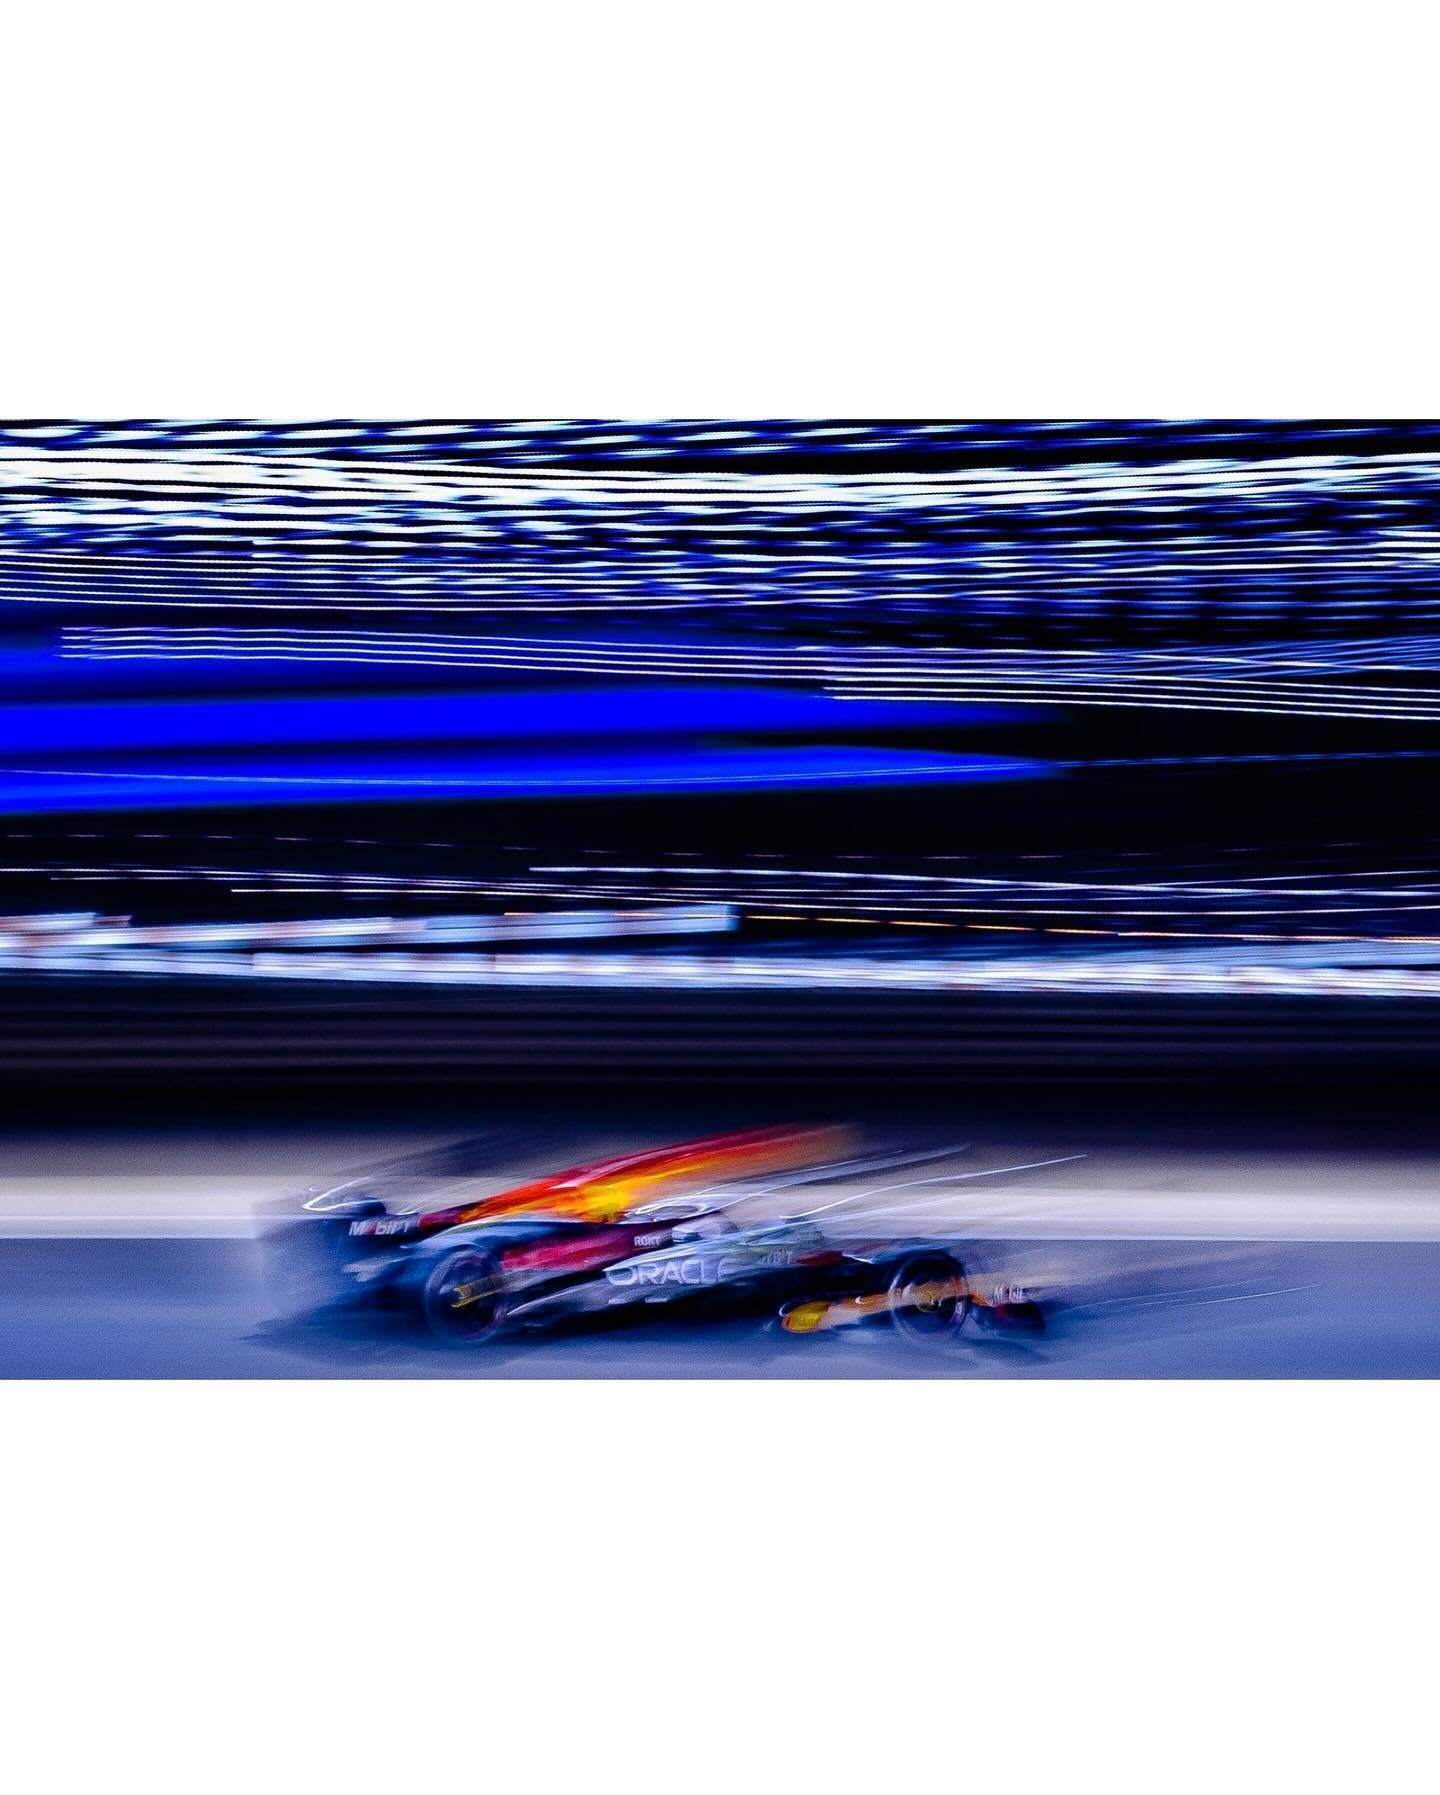 ⚡️⚡️ Max Verstappen @ 1/15e seconde #anpfoto #atwork #f1 #bahrain #canon #slowshutter #maxverstappen #formula1 #workday #grandprix #sakhirgp #2024